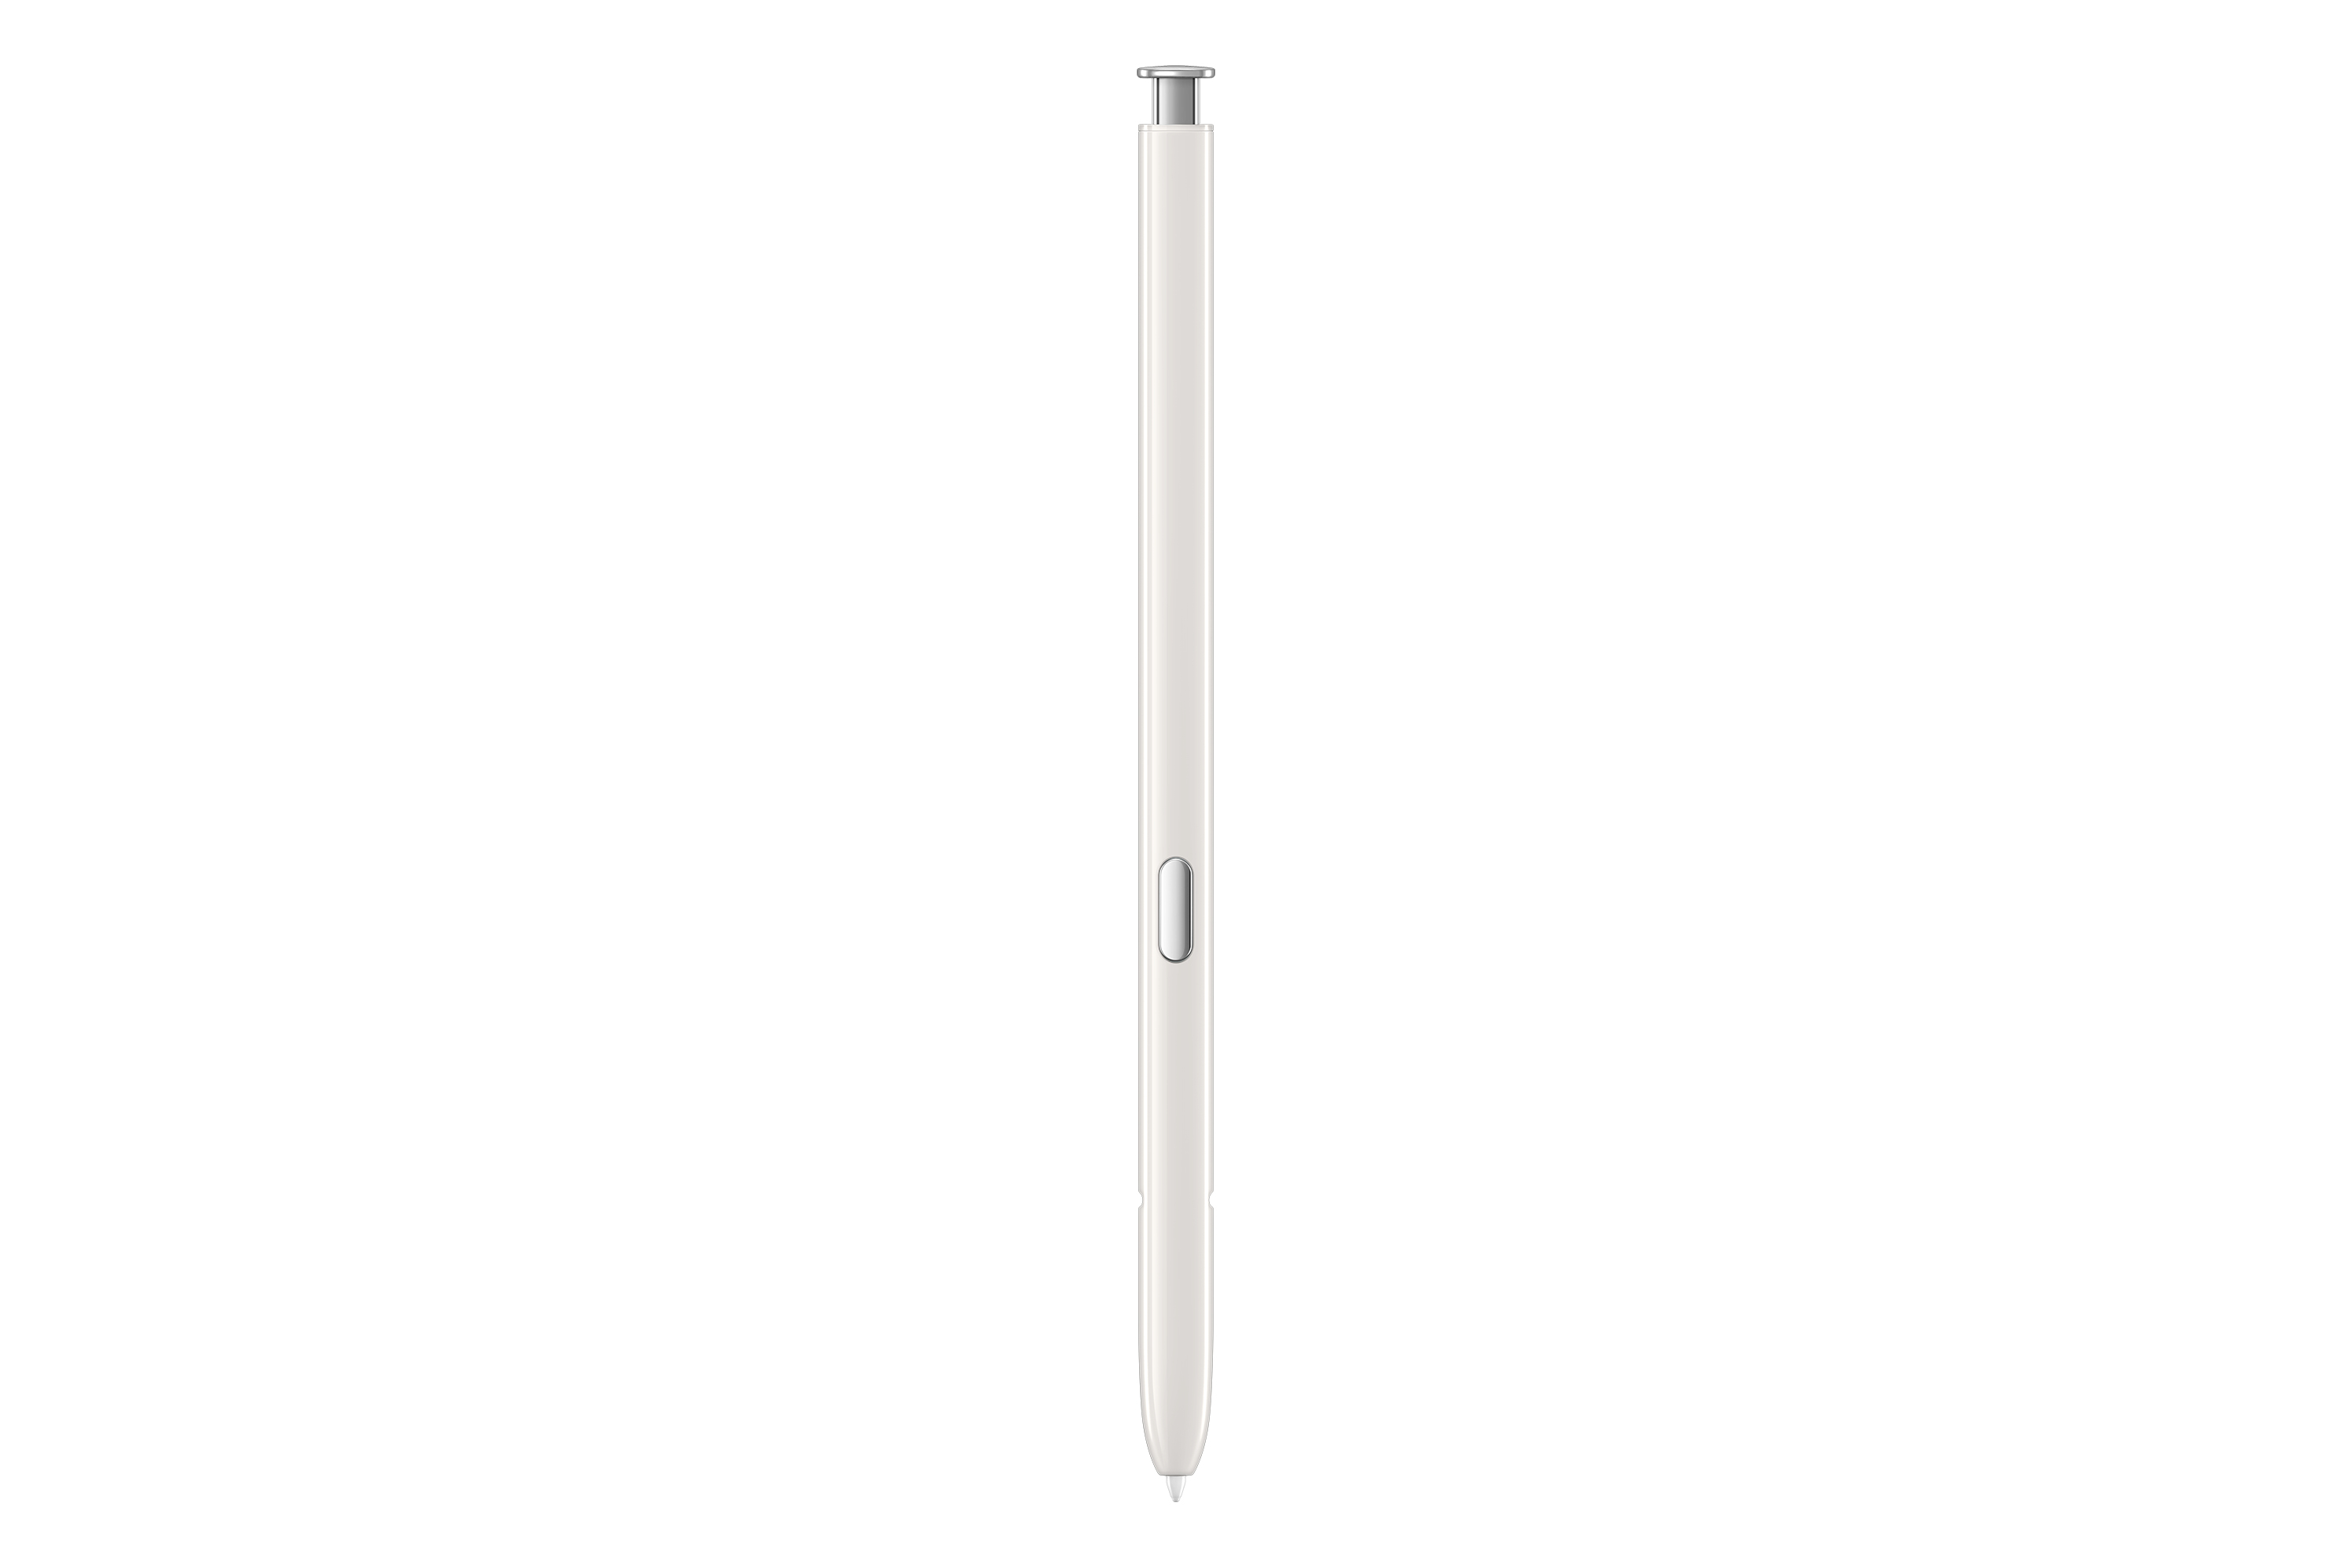 Samsung EJ-PN970BWEGWW Stylus Pen per Galaxy Note 10 SM-N970 S Pen